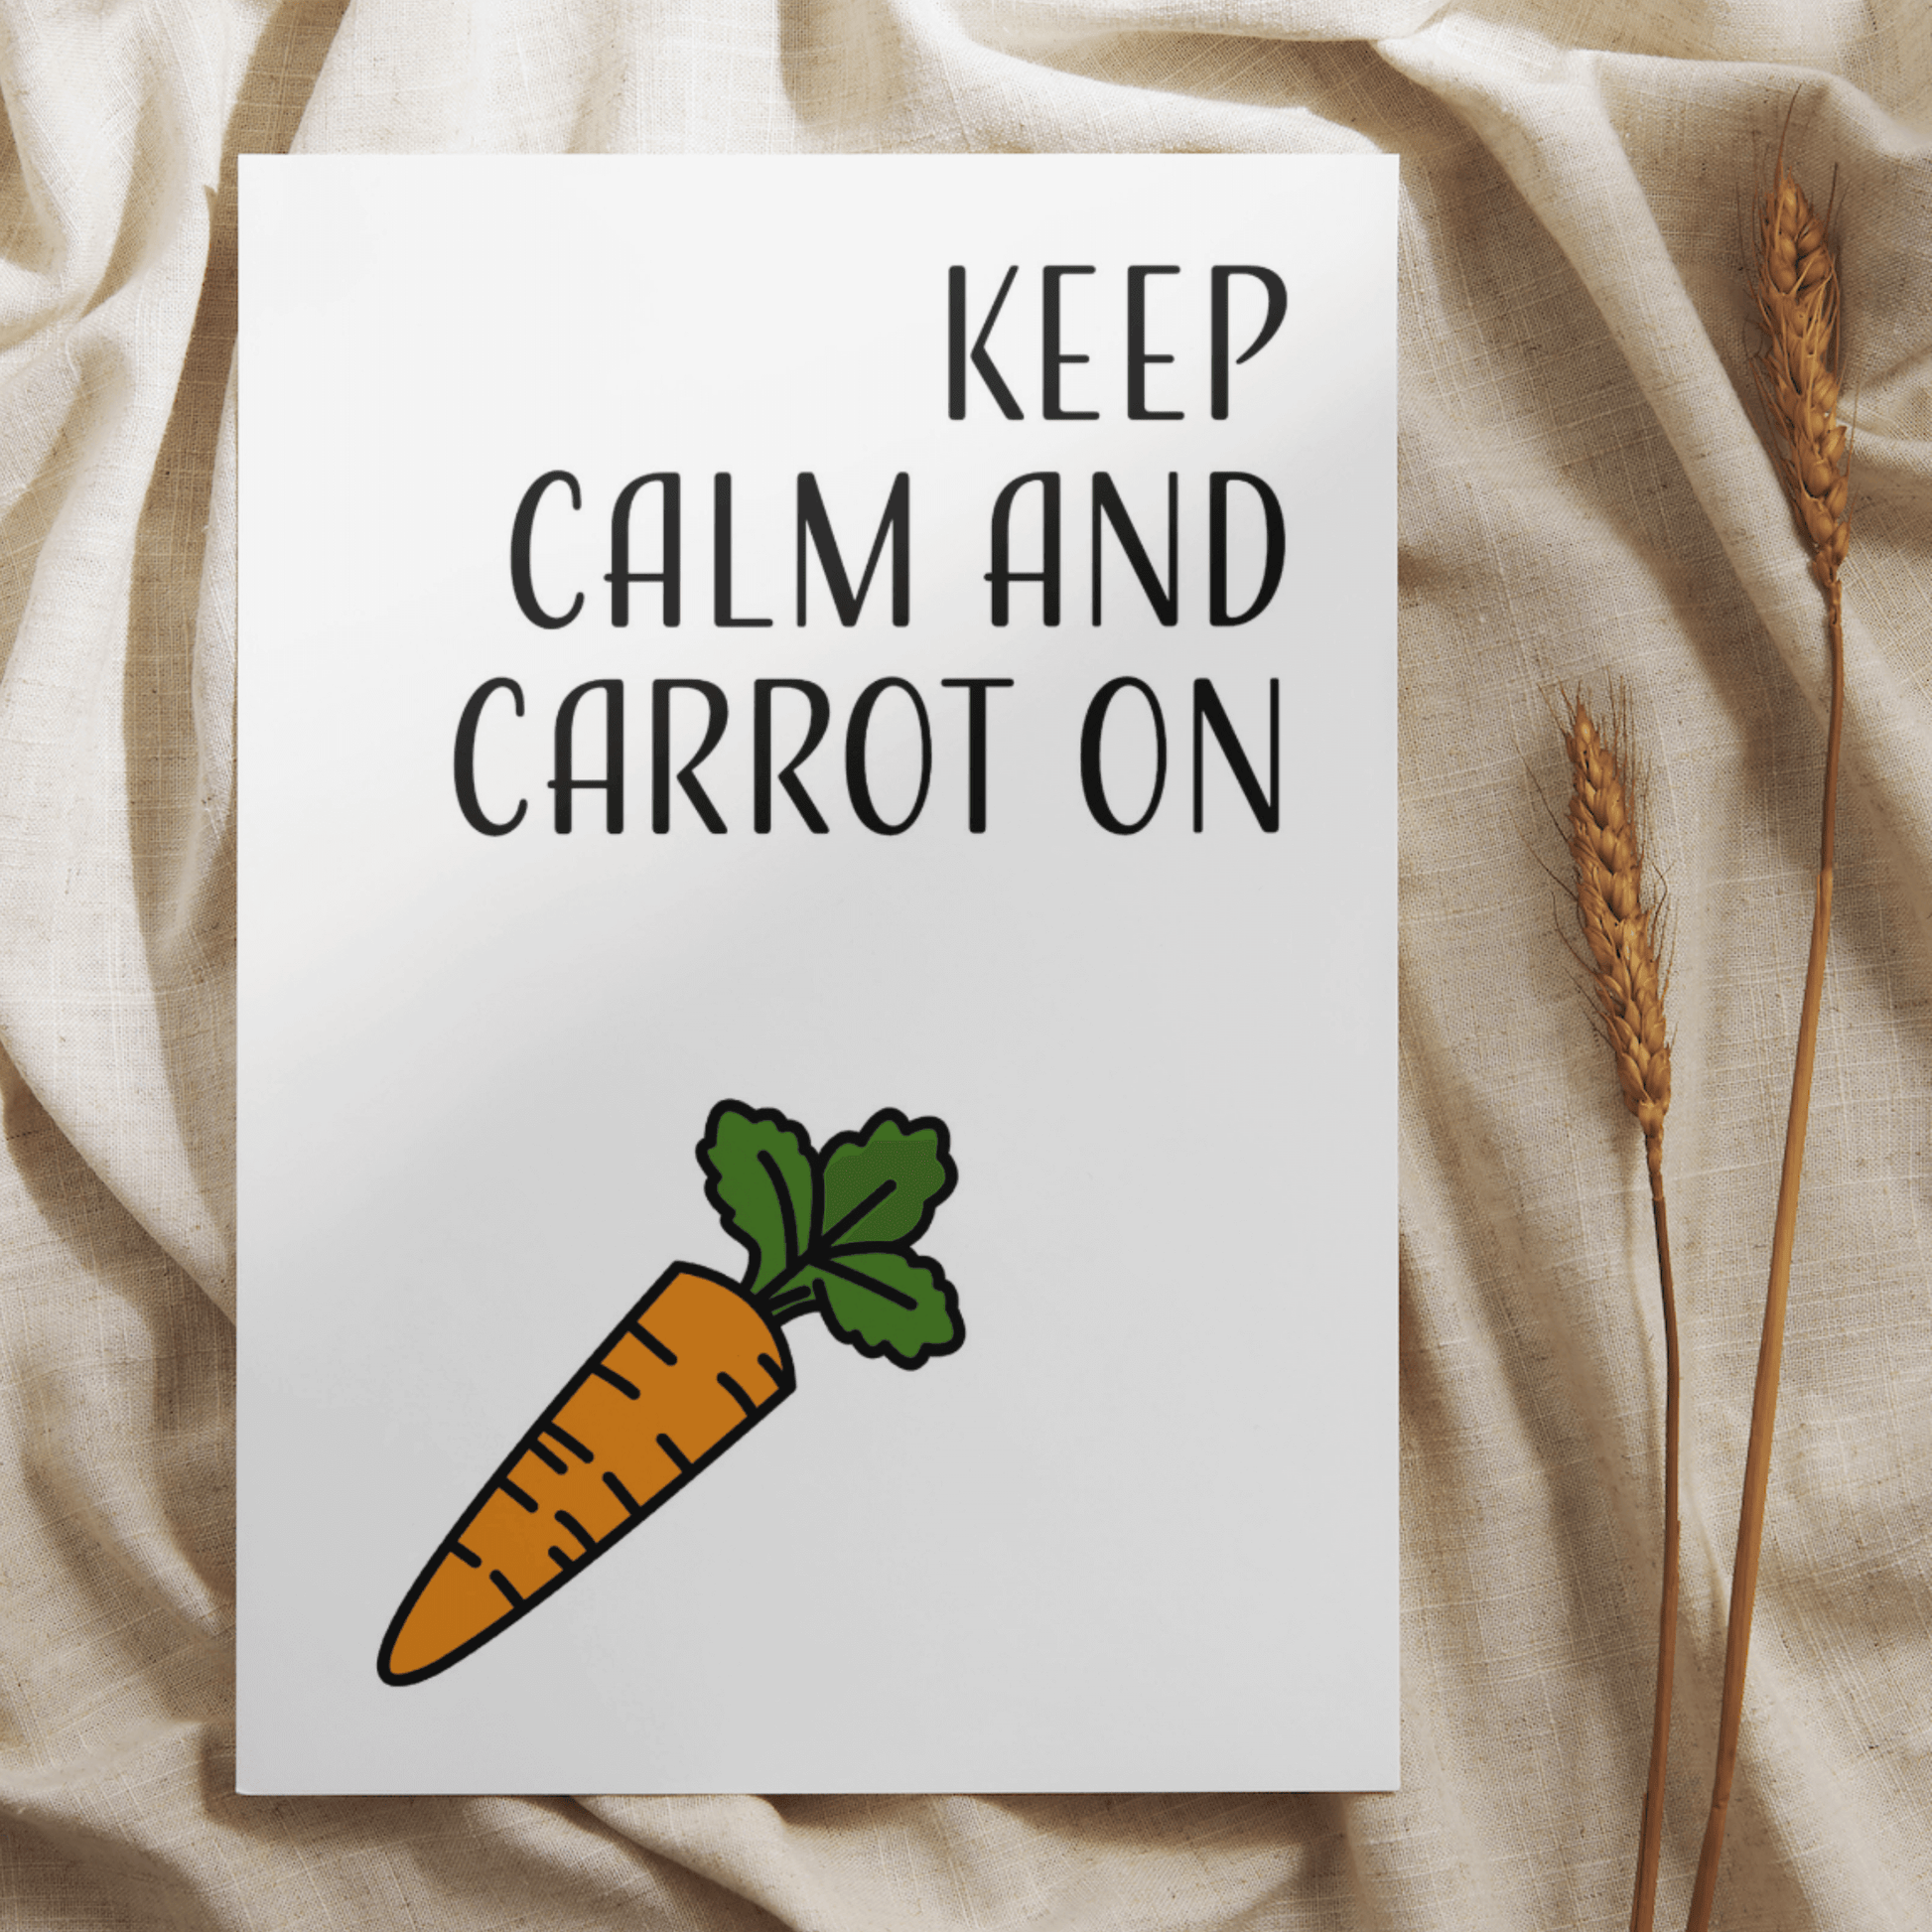 Little Kraken's Keep Calm and Carrot On, Good Luck Cards for £3.50 each